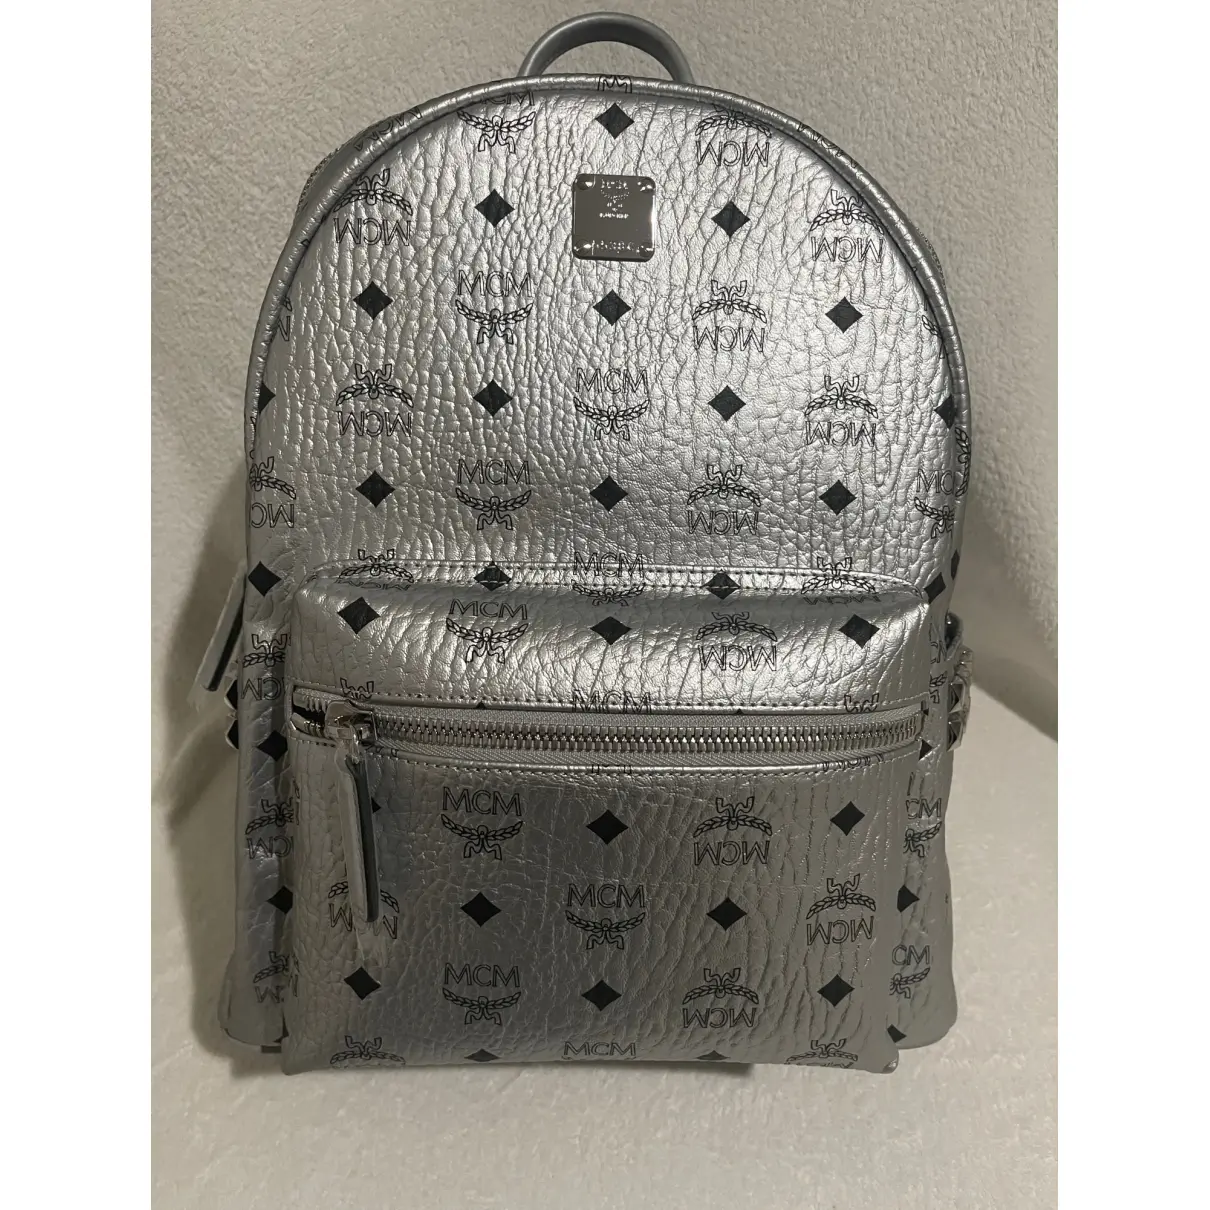 Buy MCM Cloth backpack online